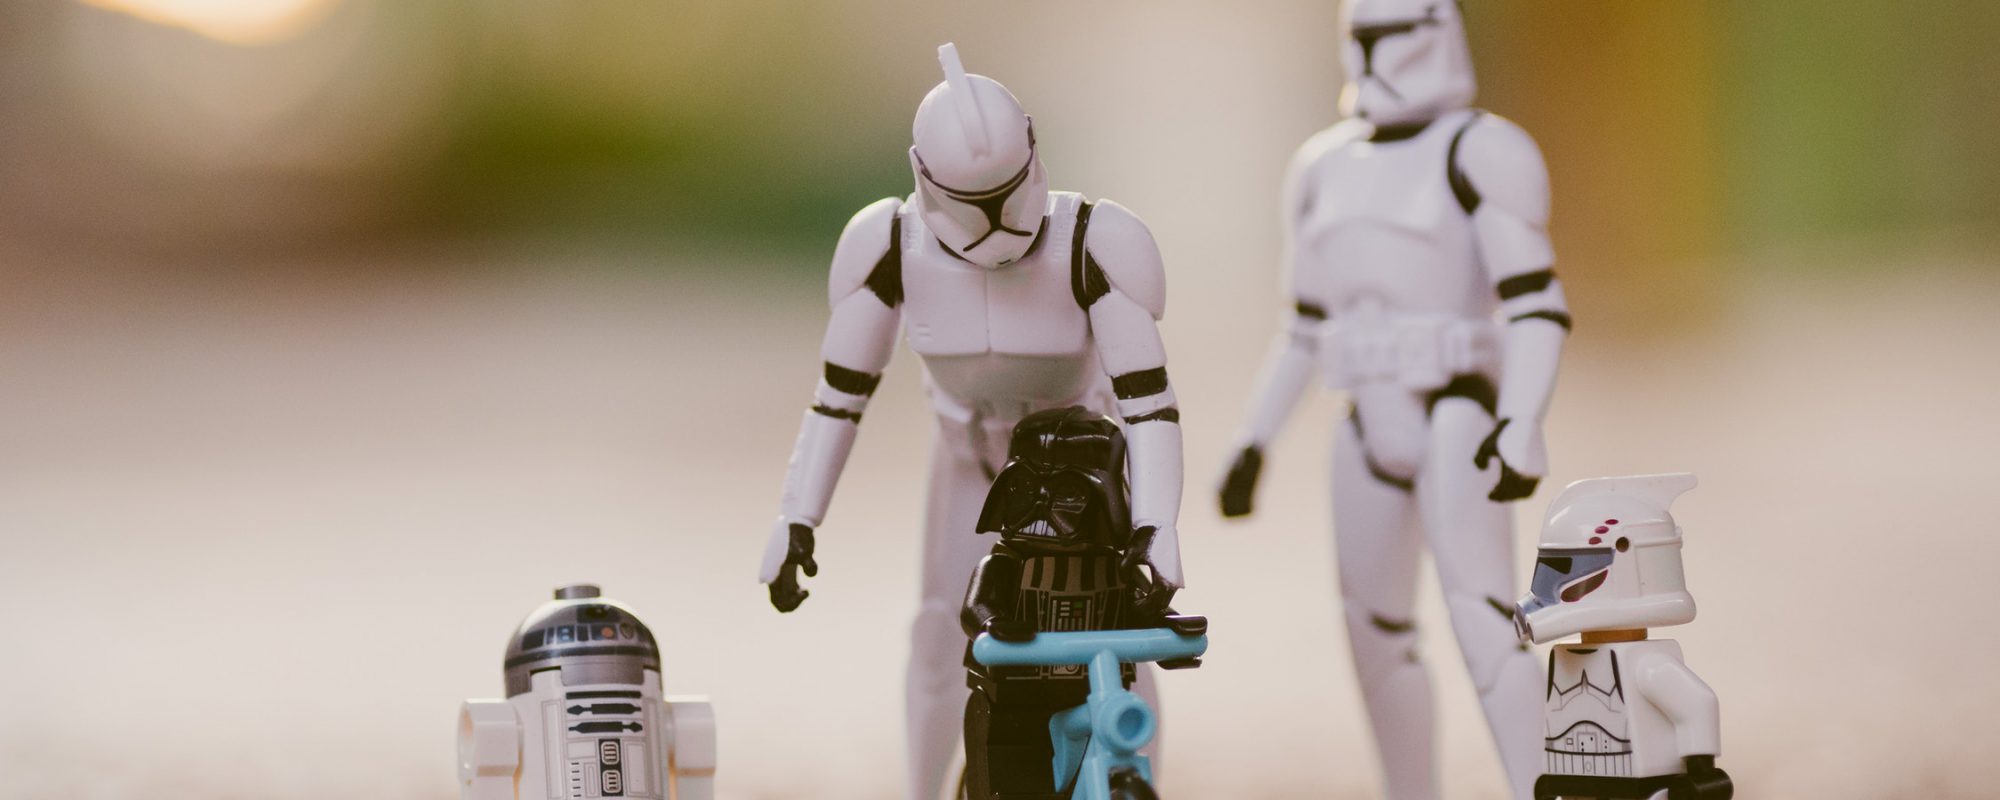 Storm Trooper -perhe